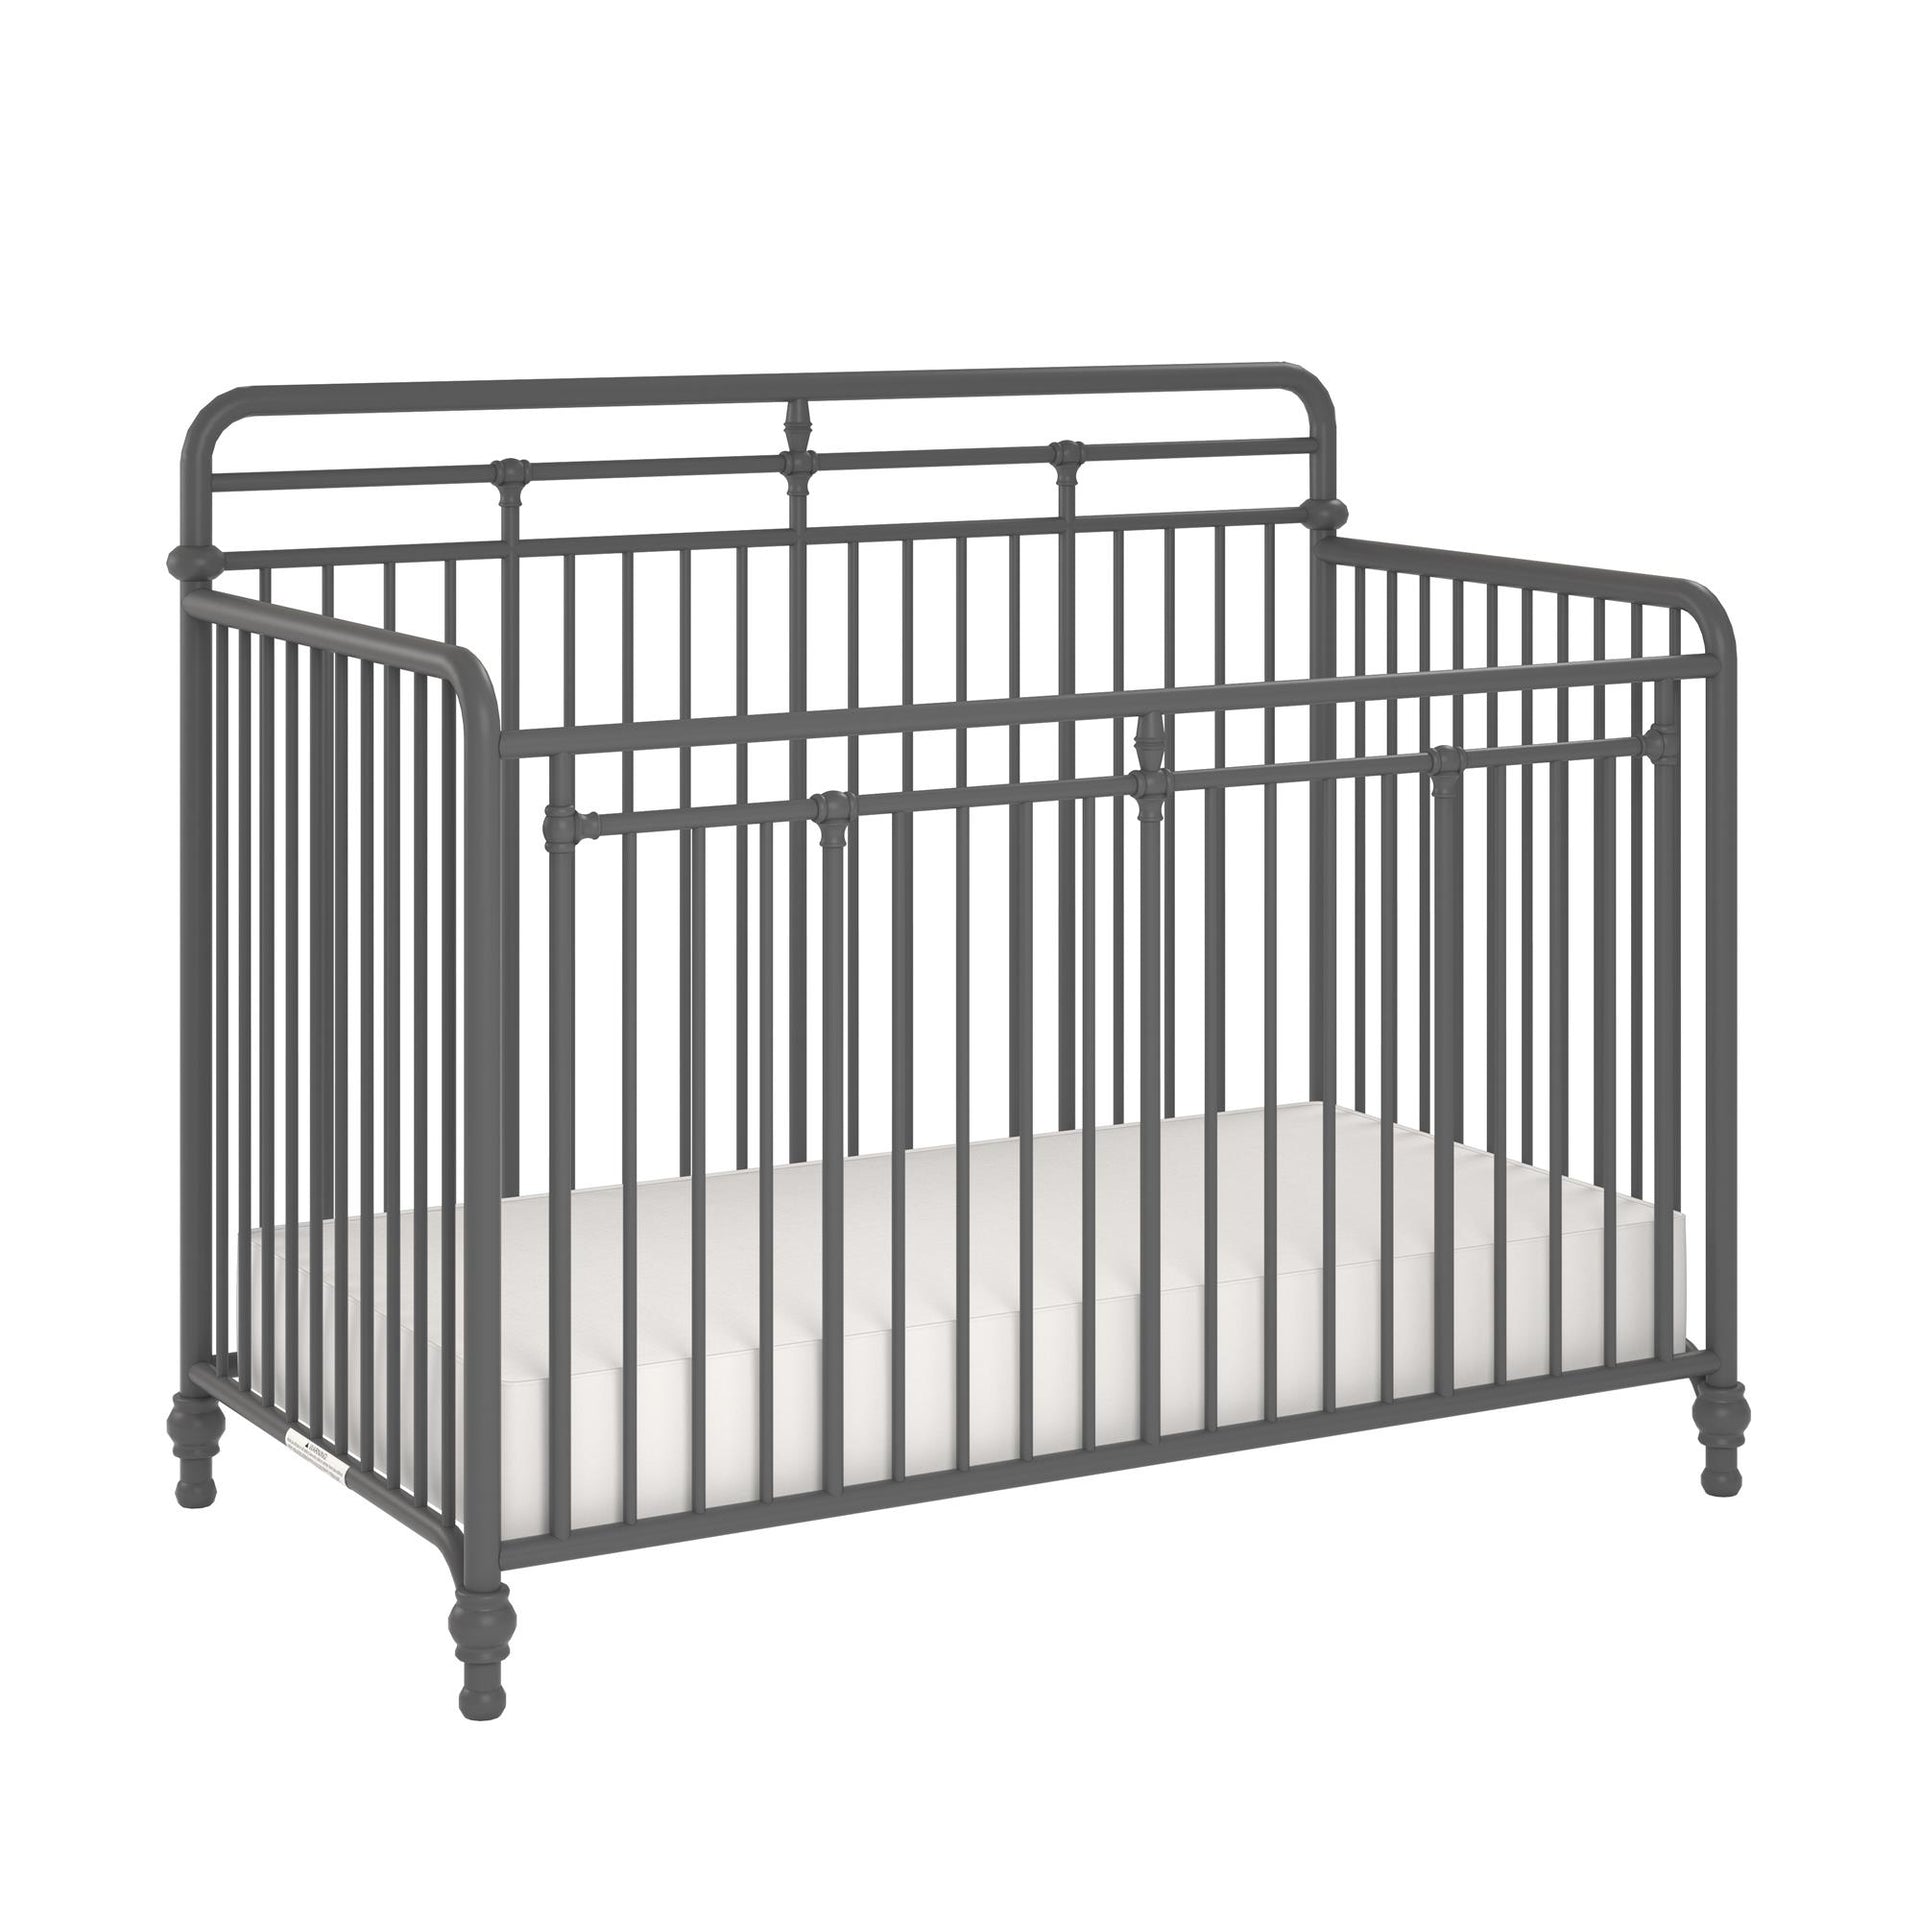 Monarch Hill Hawken 3 in 1 Convertible Metal Crib - Graphite Grey